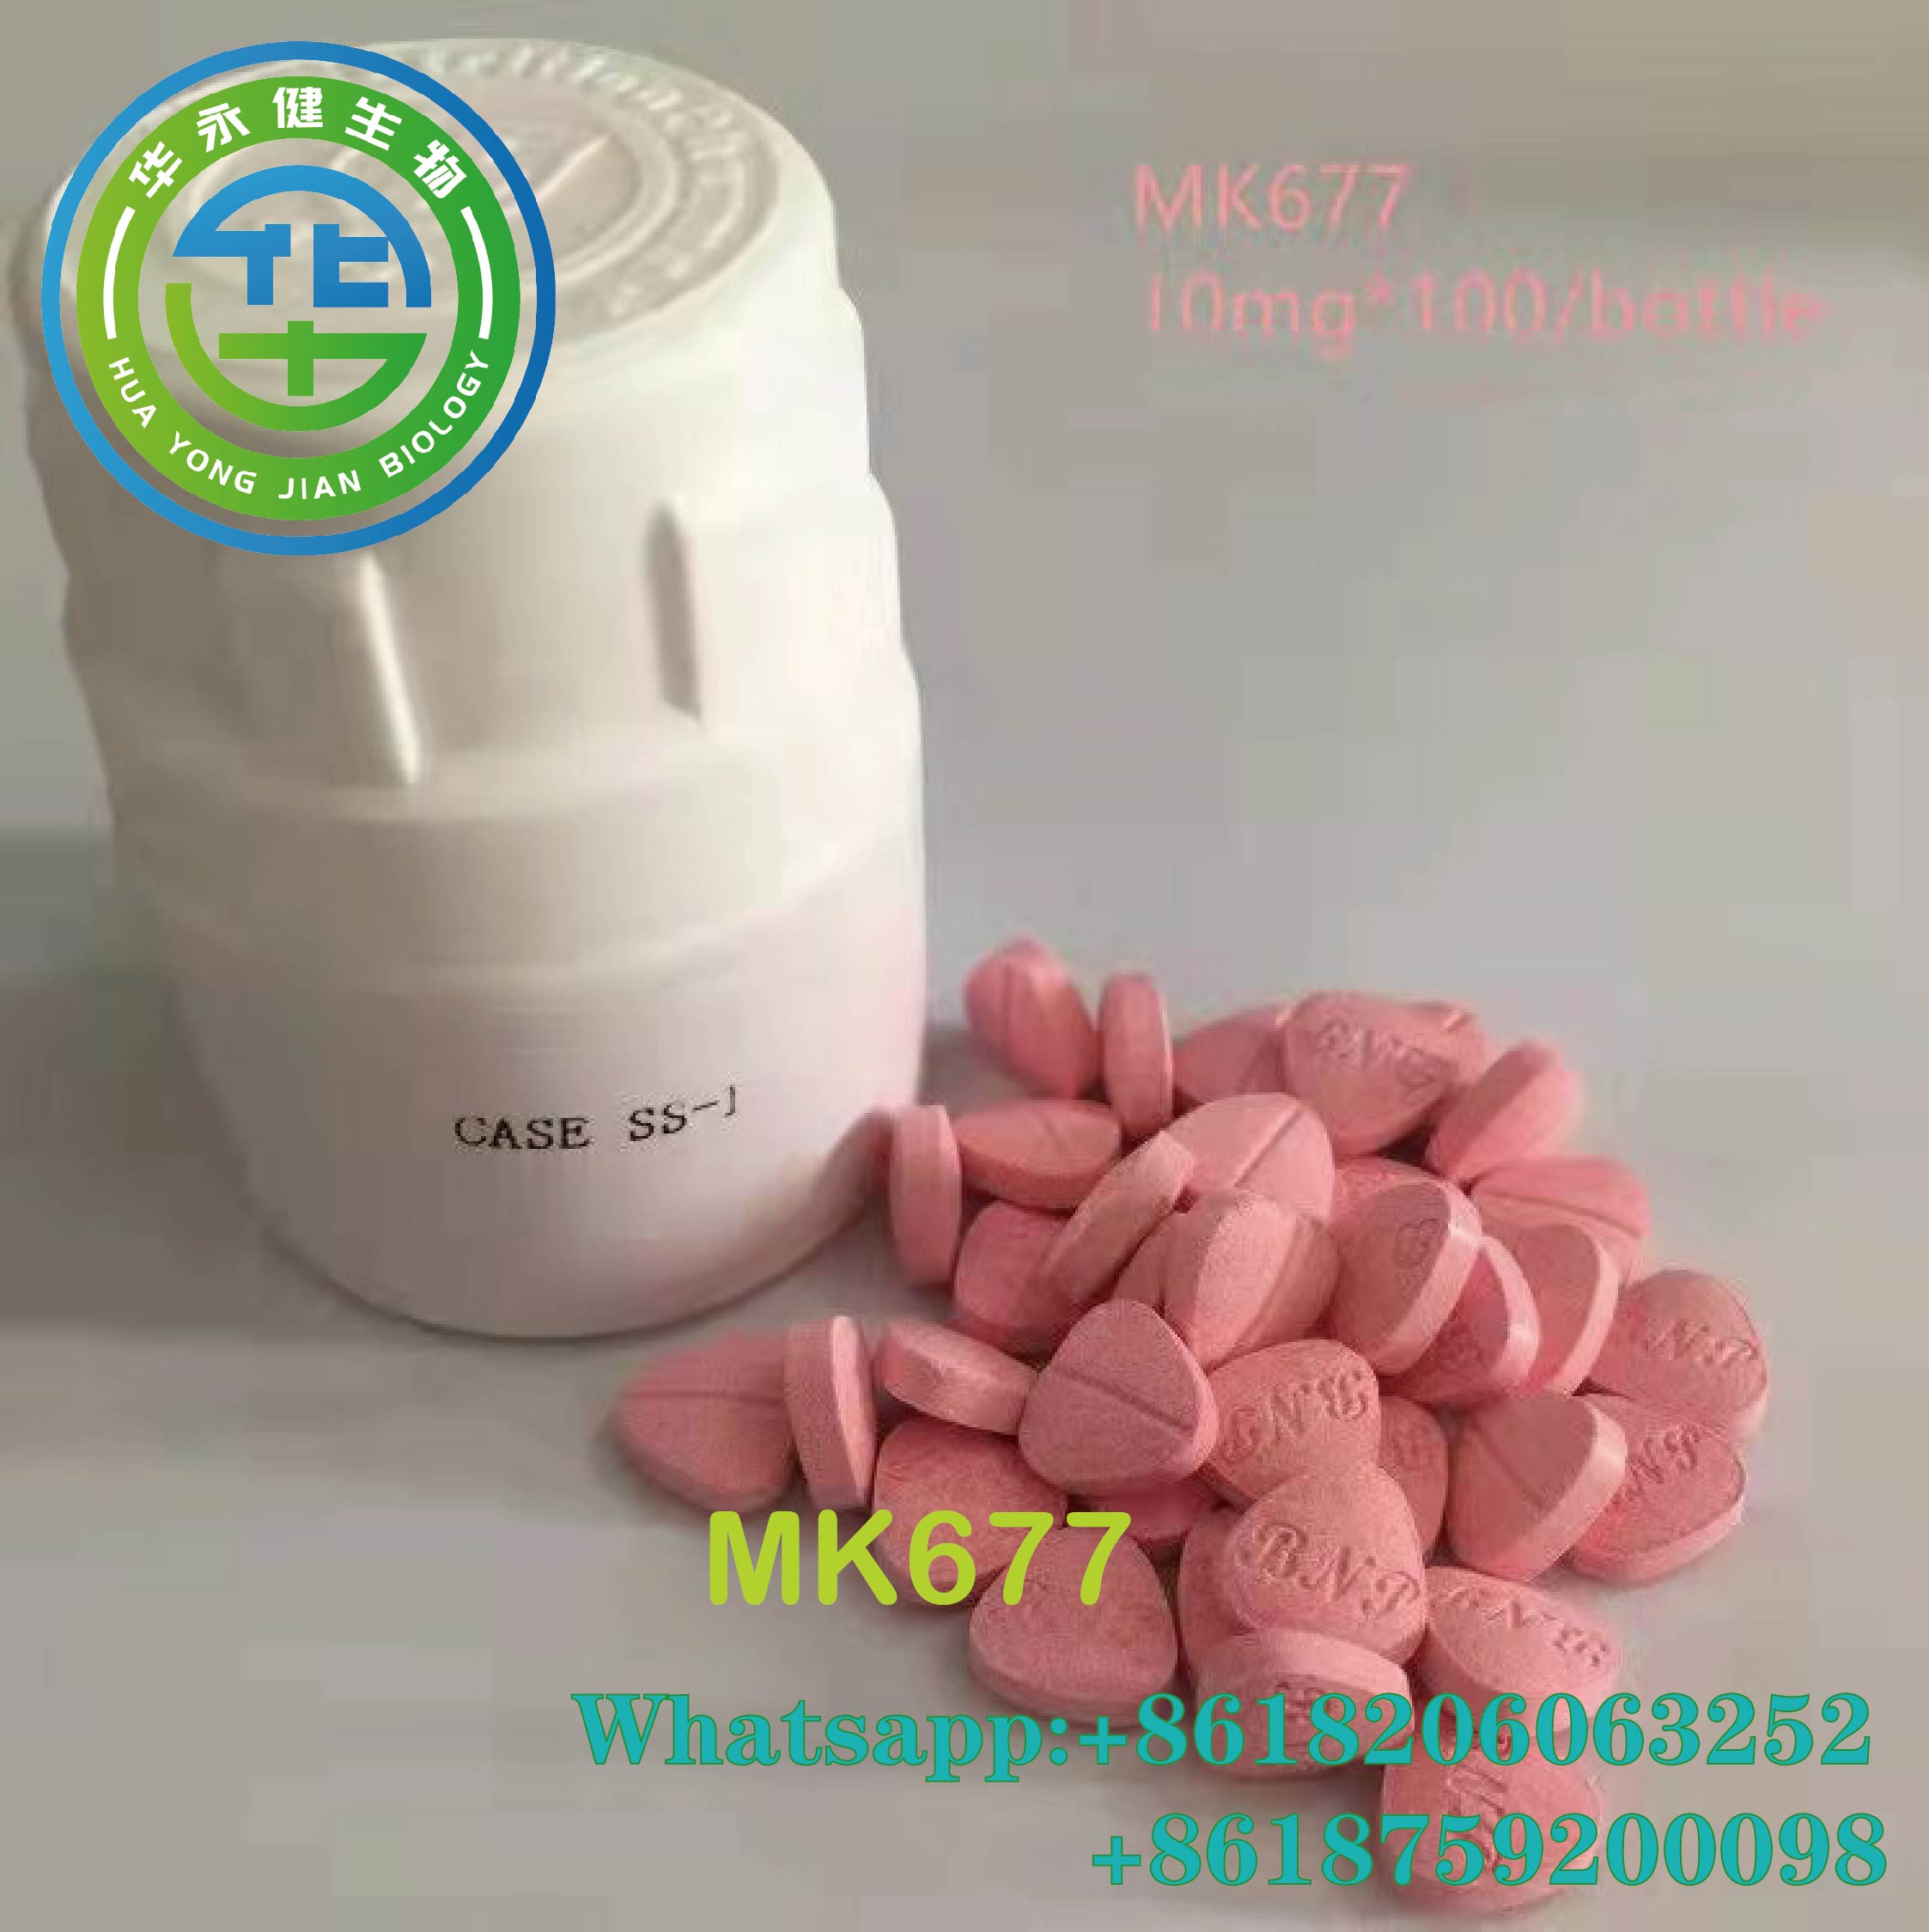 99.9% High Pure Sarms MK677 100Pills/bottle Pills Raw Powder Ibutamoren 10mg CAS 159634-47-6 For Muscle Shape